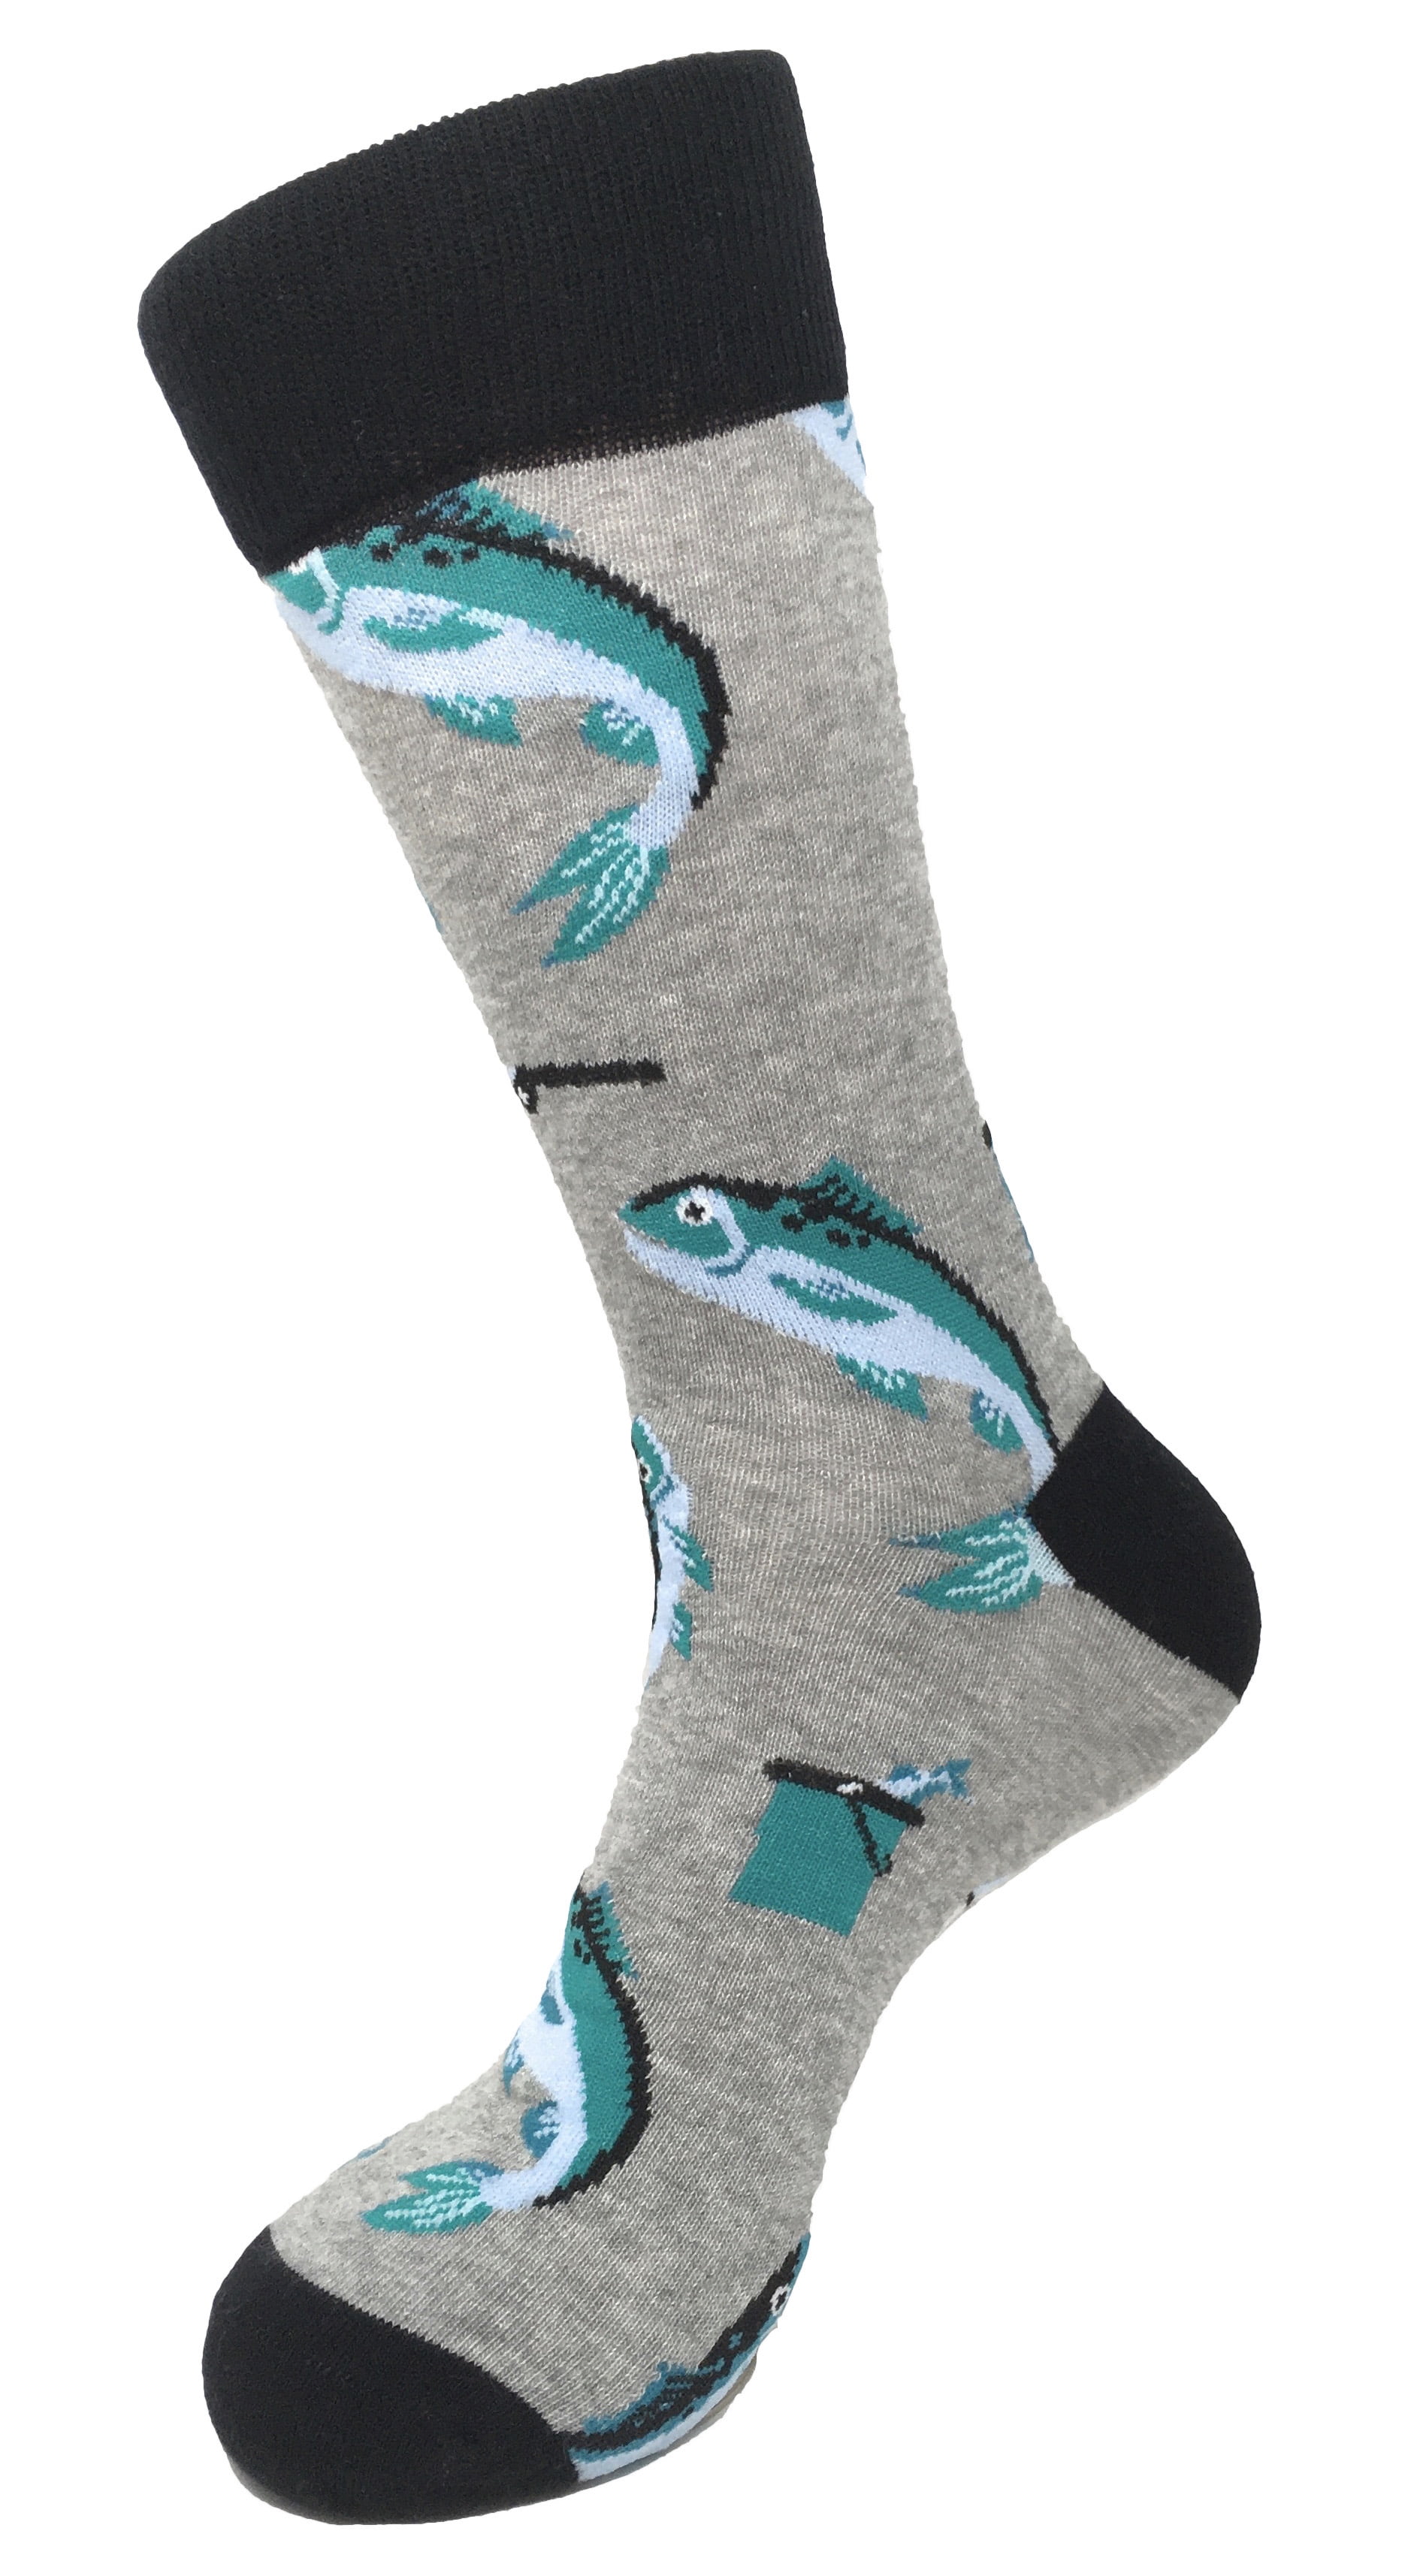 Mens Cotton Socks Warm Funny Fruit Cat Fish Novelty Dress Socks For Wedding Gift